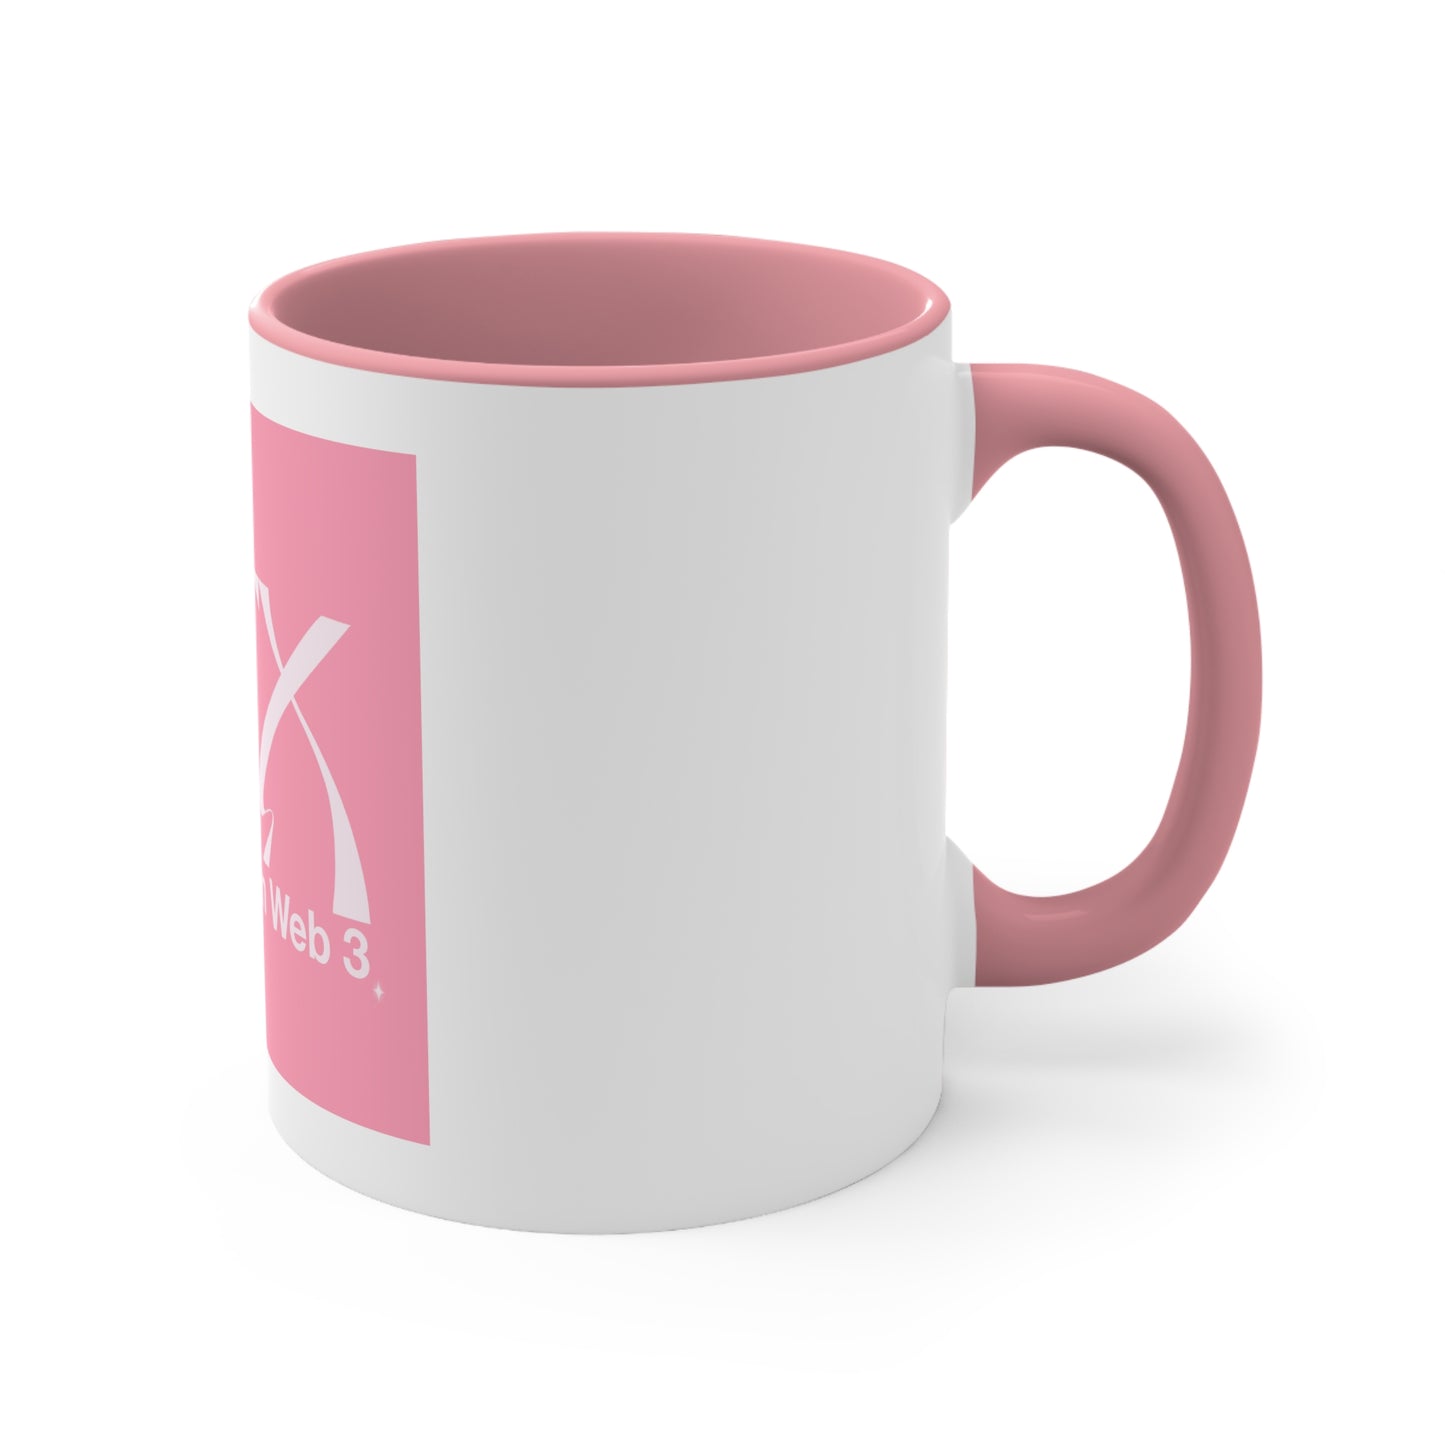 WiW3 Logo - Coffee Mug, 11oz